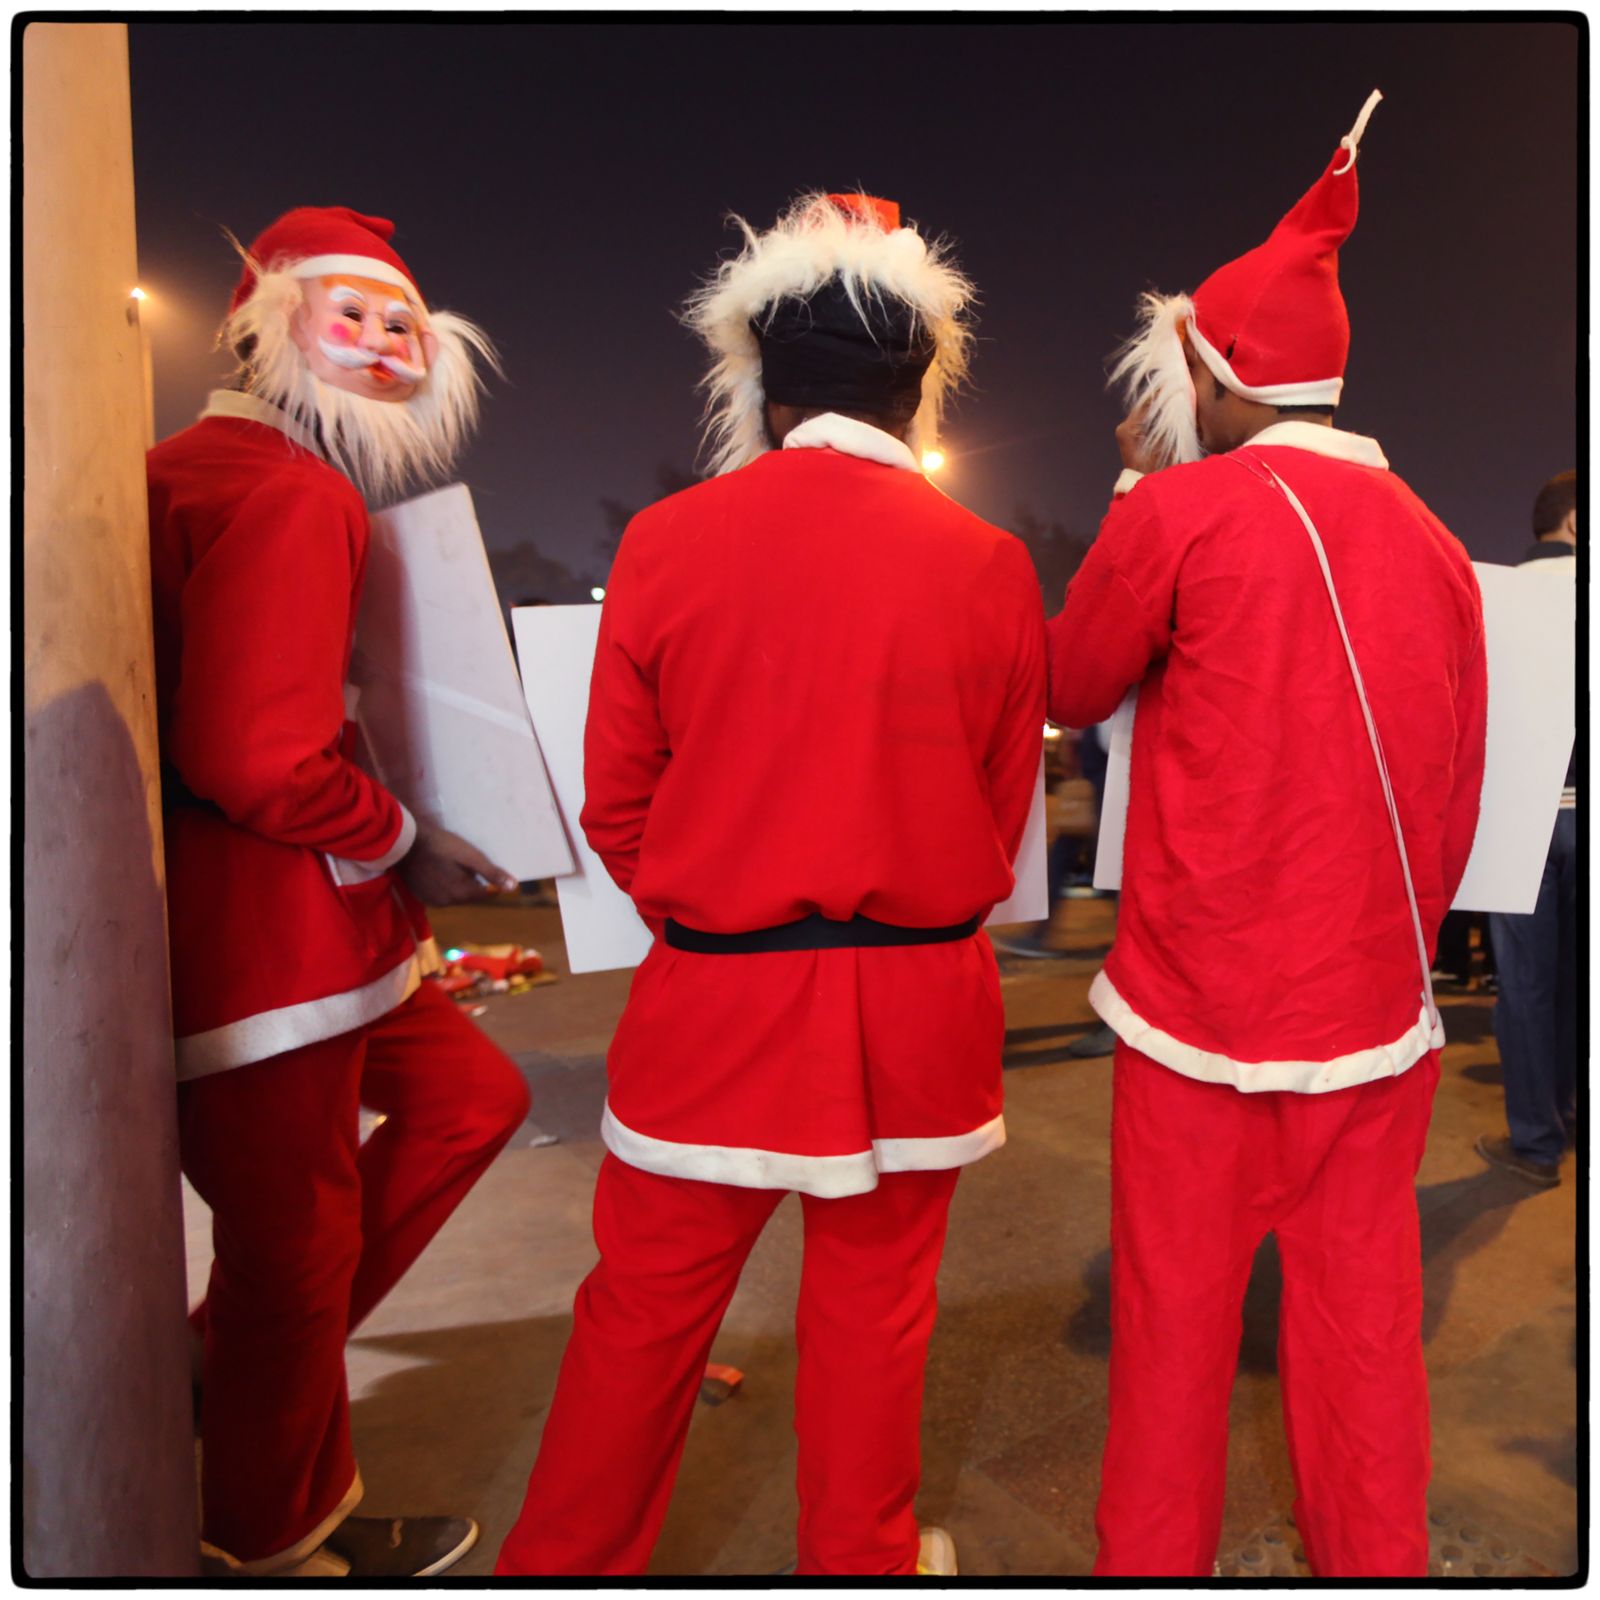 © Vijay S. Jodha - Men dressed as Santa Claus to promote a store selling kids wear.